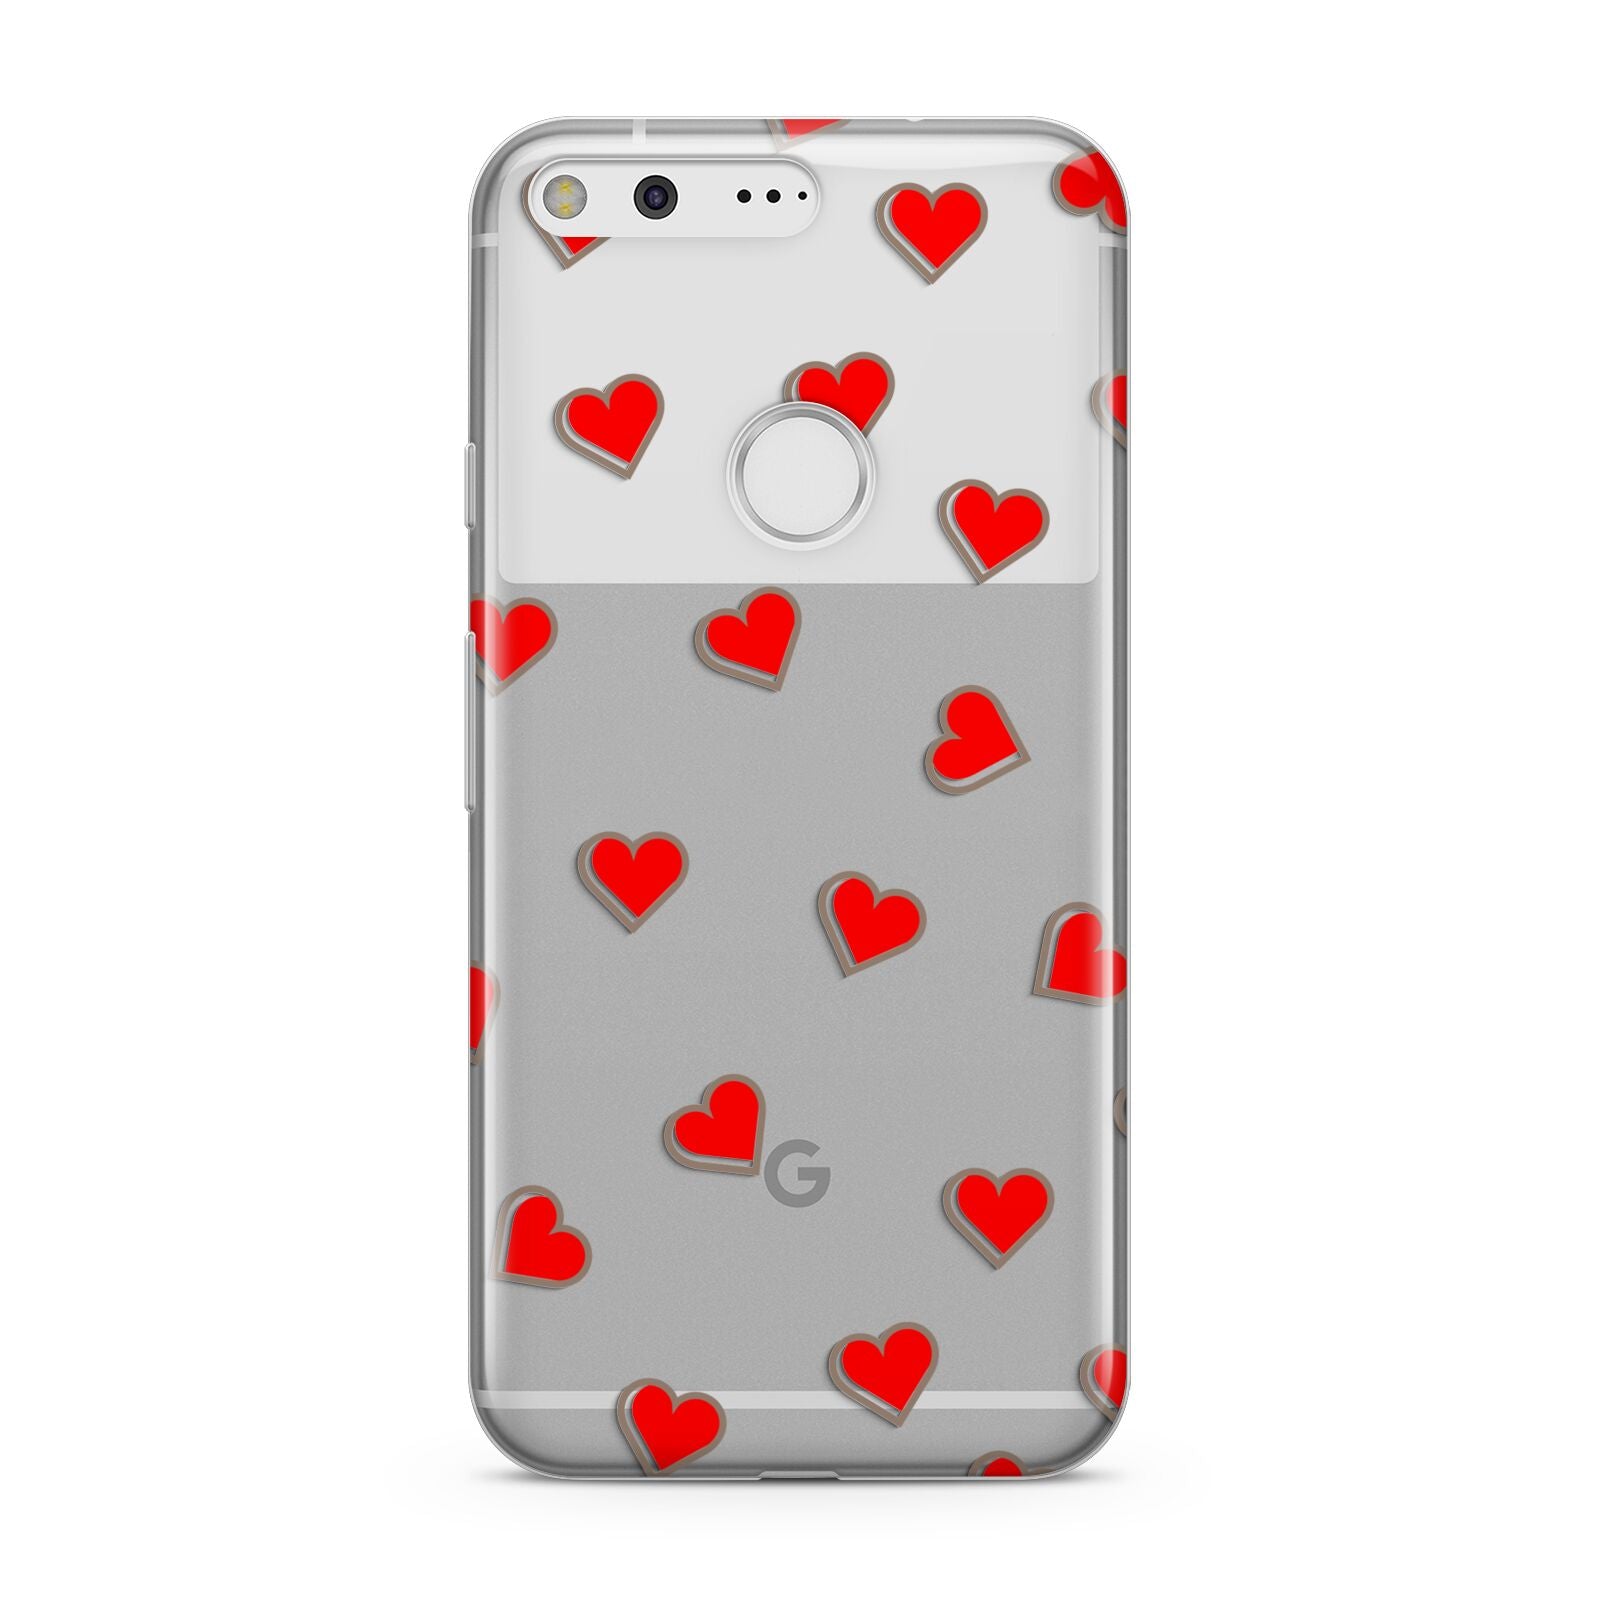 Cute Red Hearts Google Pixel Case